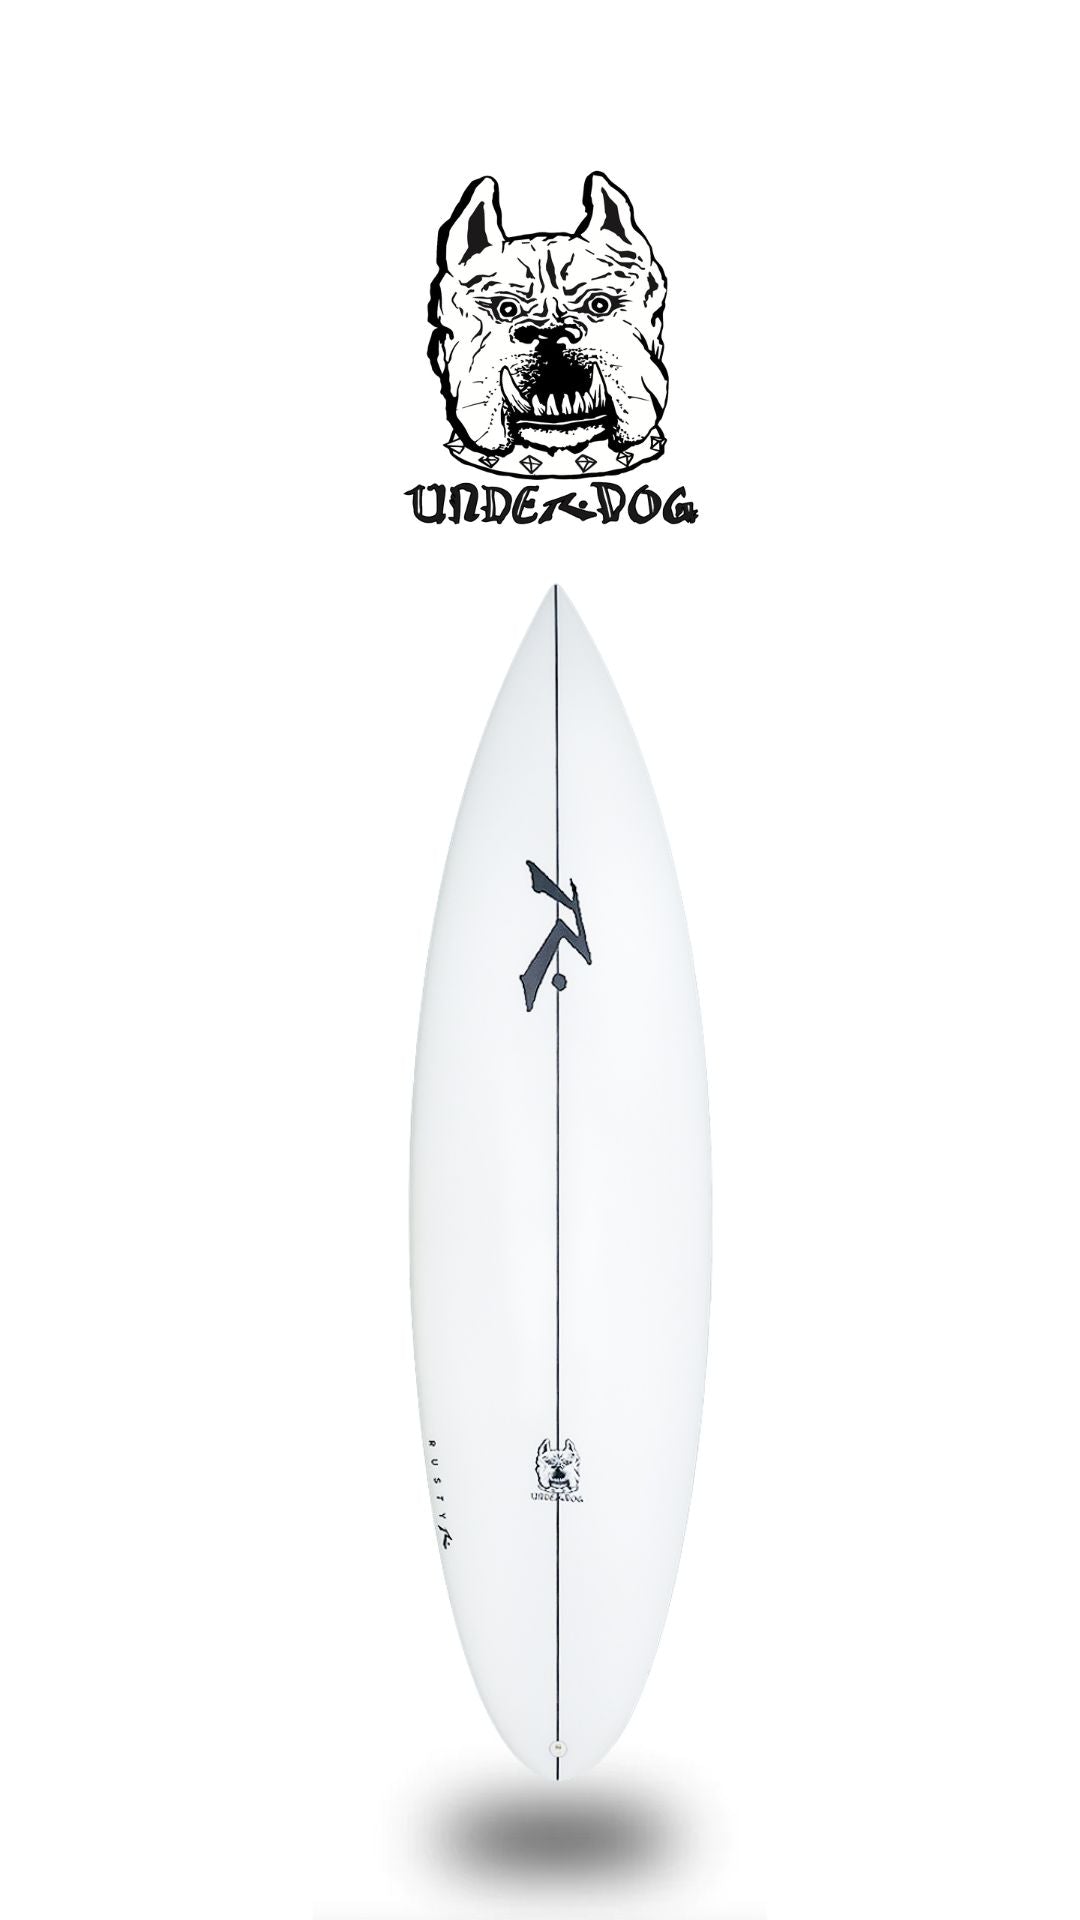 Underdog - Caio Ibelli Pro Model High-Performance Shortboard - Rusty Surfboards - Deck View